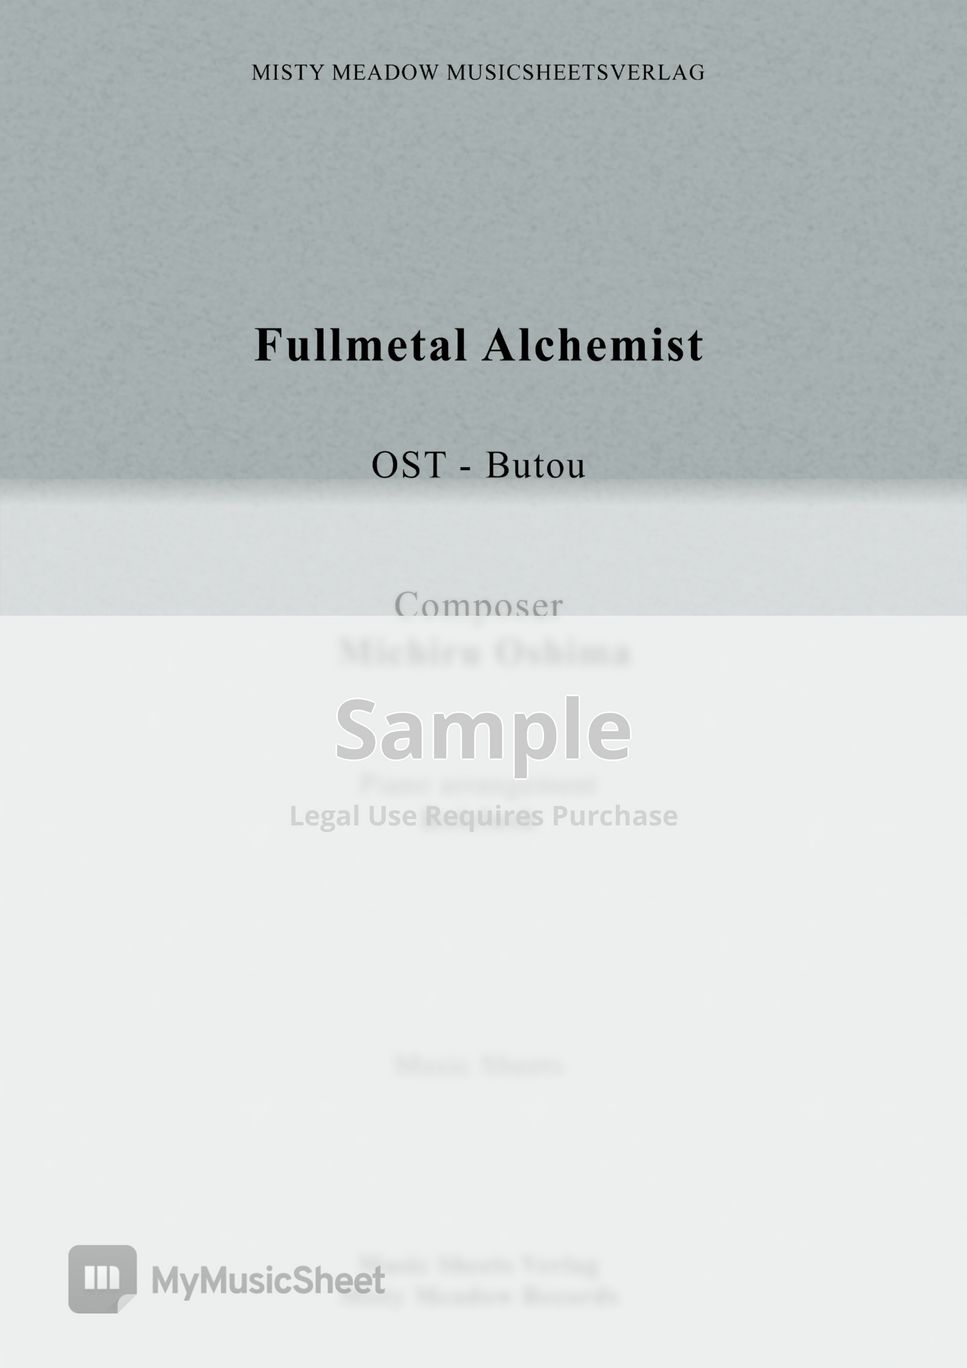 Michiru Oshima - Fullmetal Alchemist OST - Butou (piano cover) by Rolelush